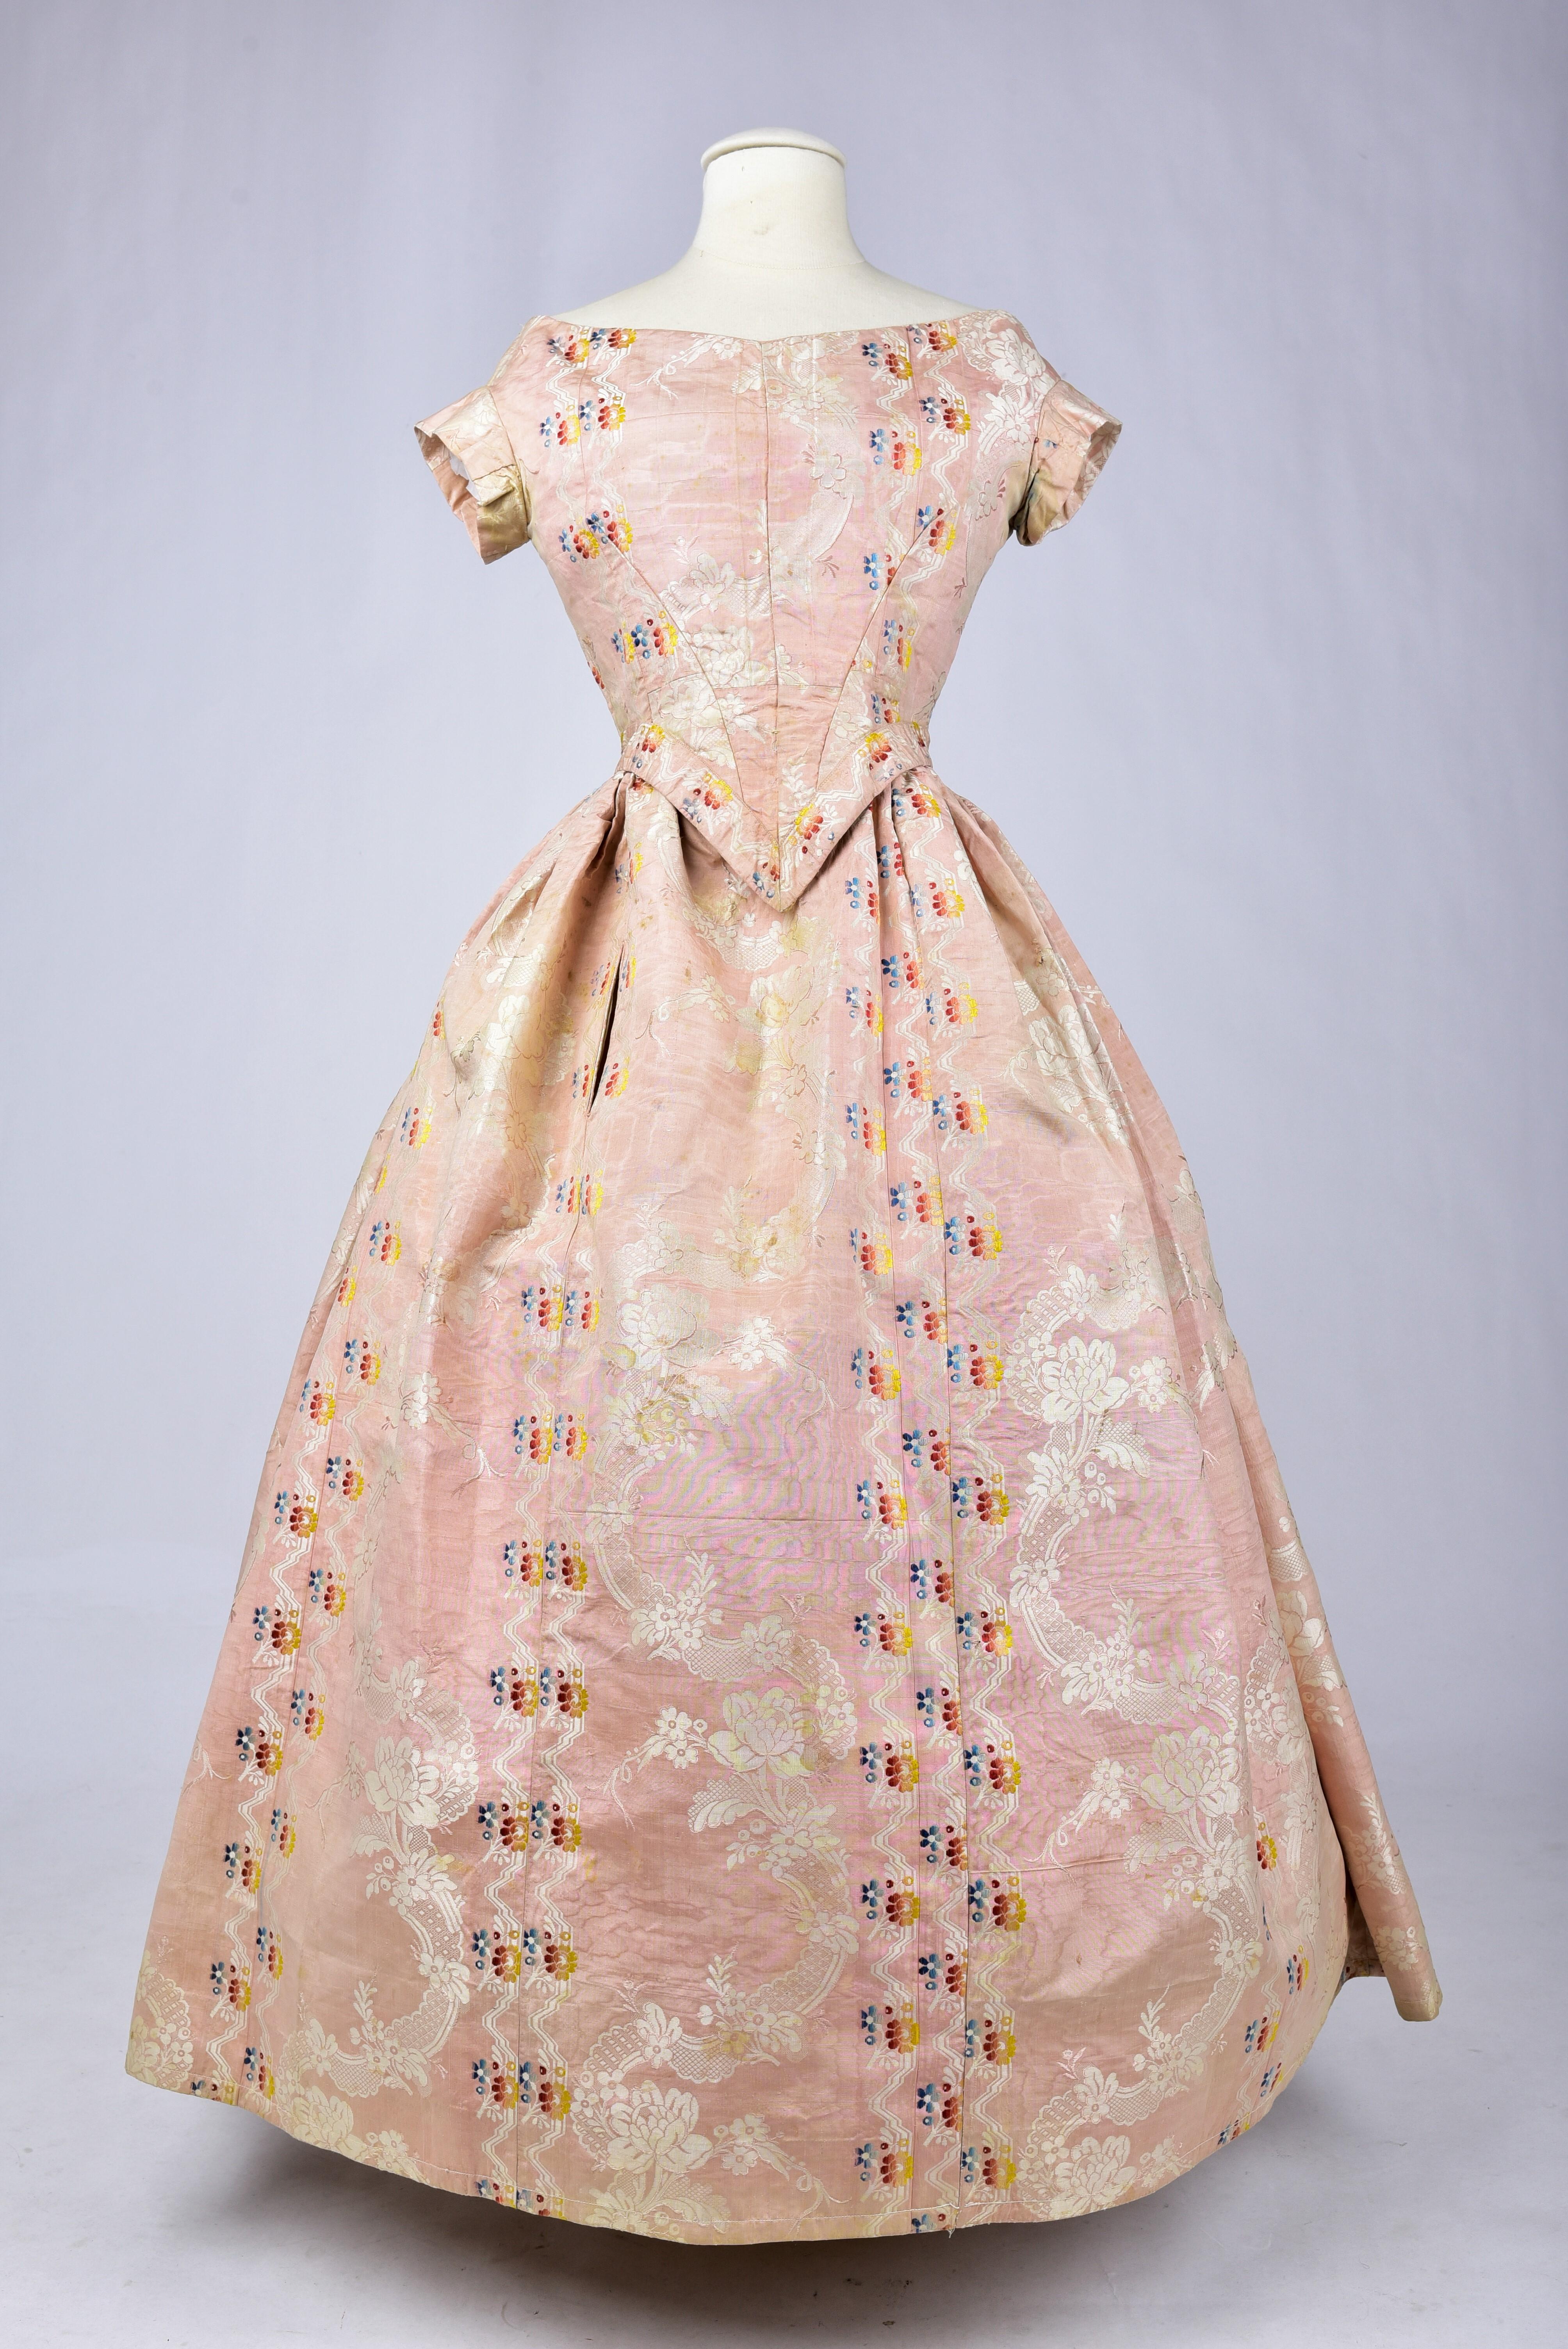 Ceremonial Crinoline Dress, Mantilla and Manilla Shawl - Spain Circa 1860 5